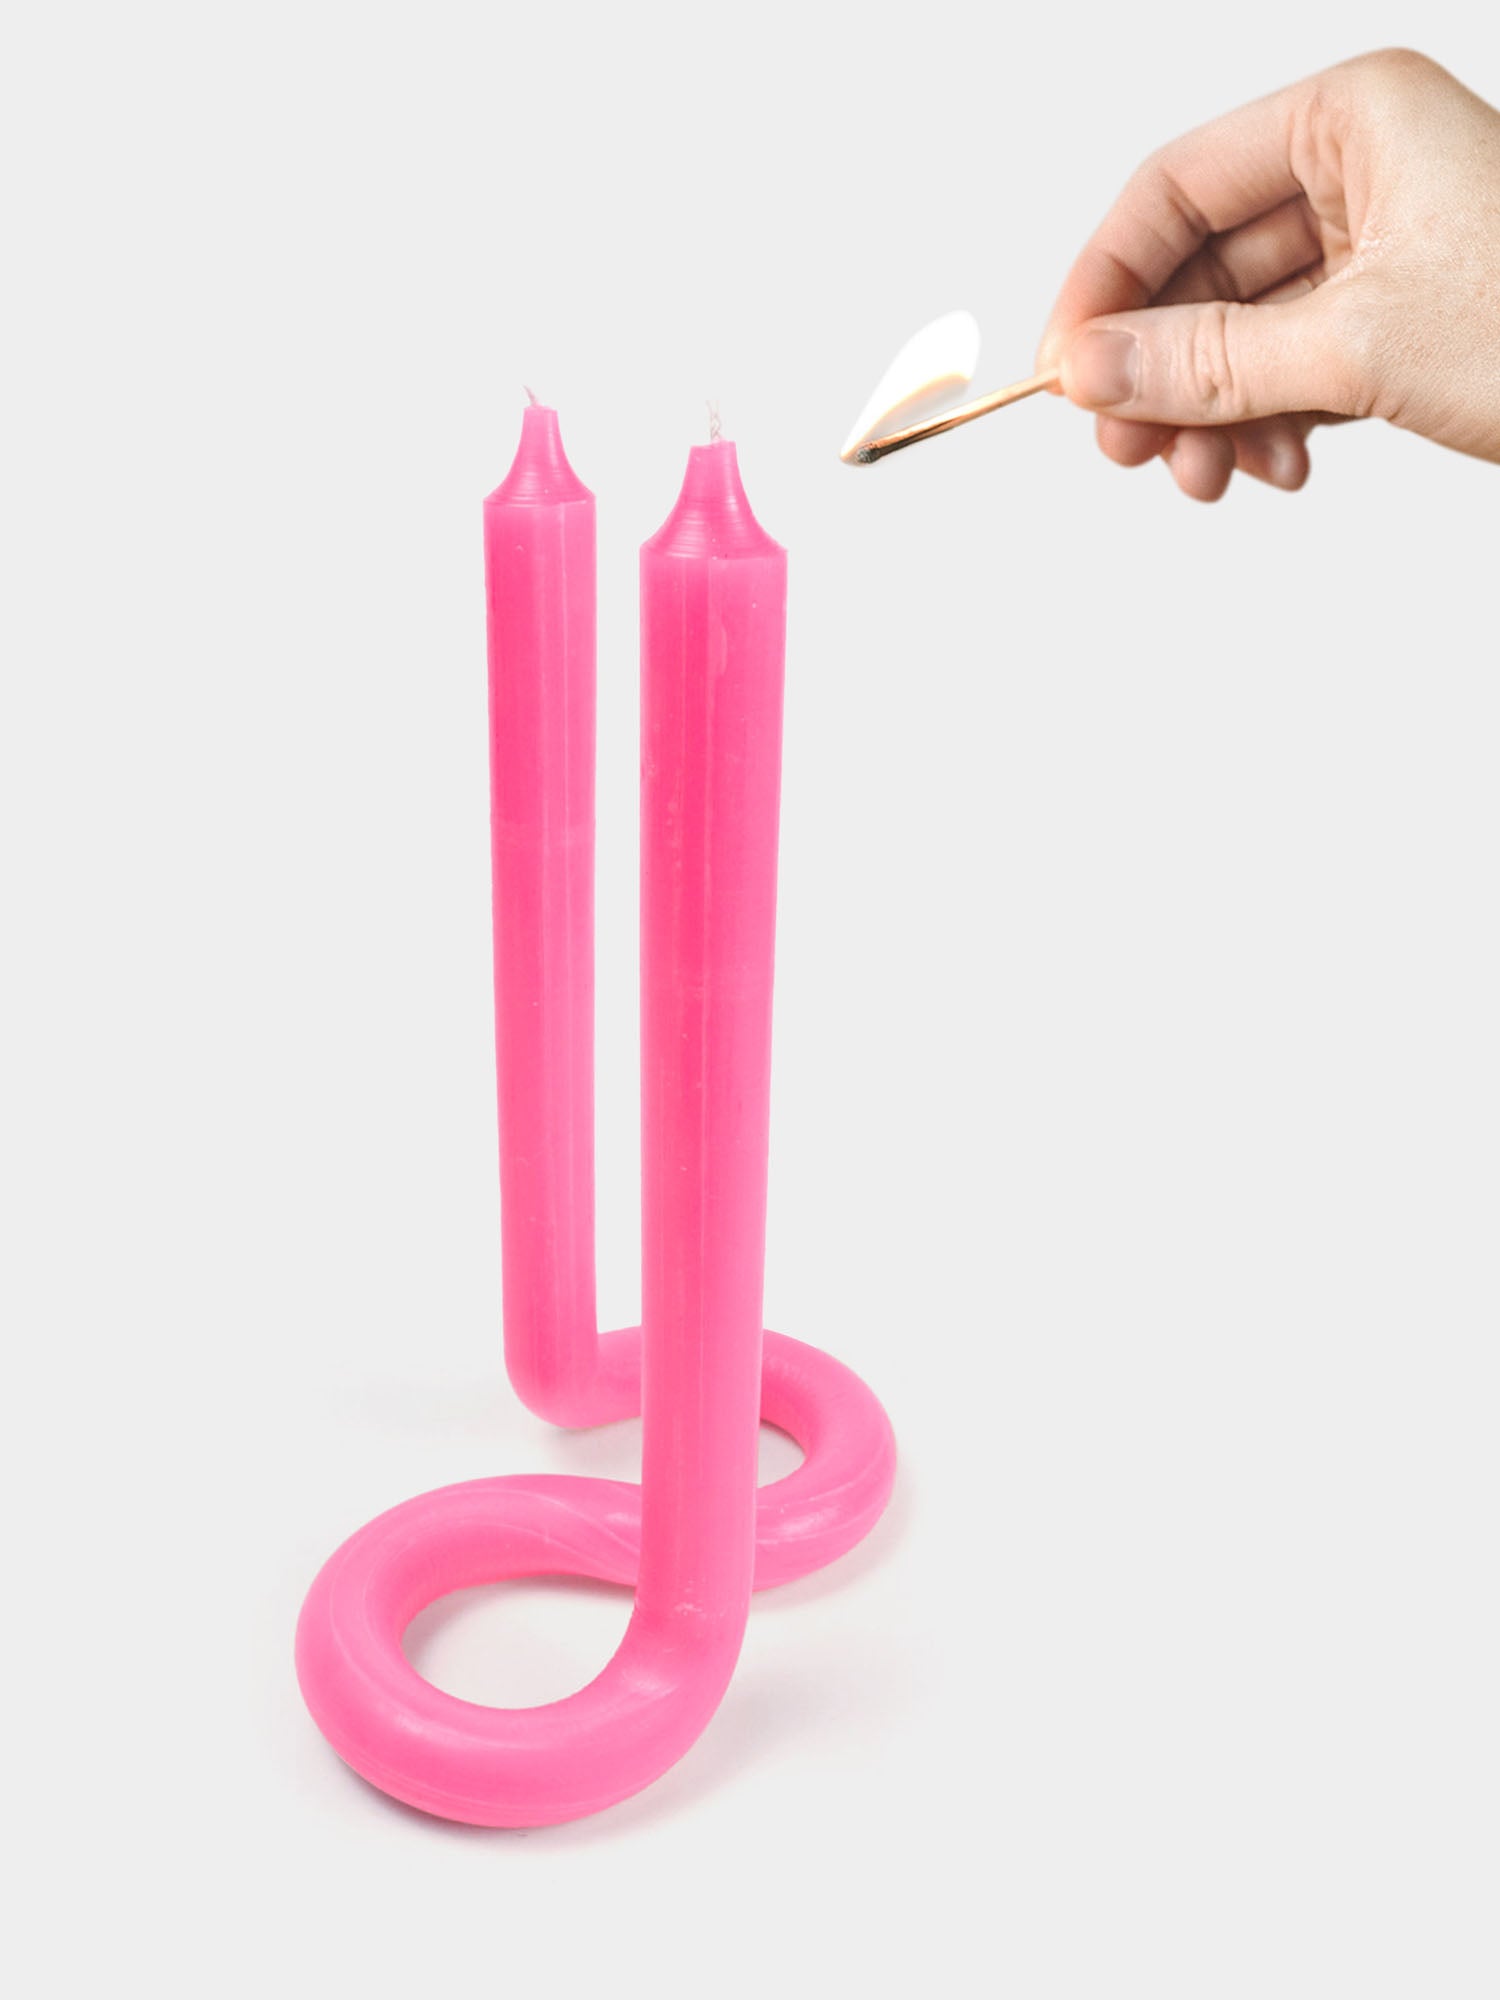 Twist Candle Sticks by Lex Pott, pink